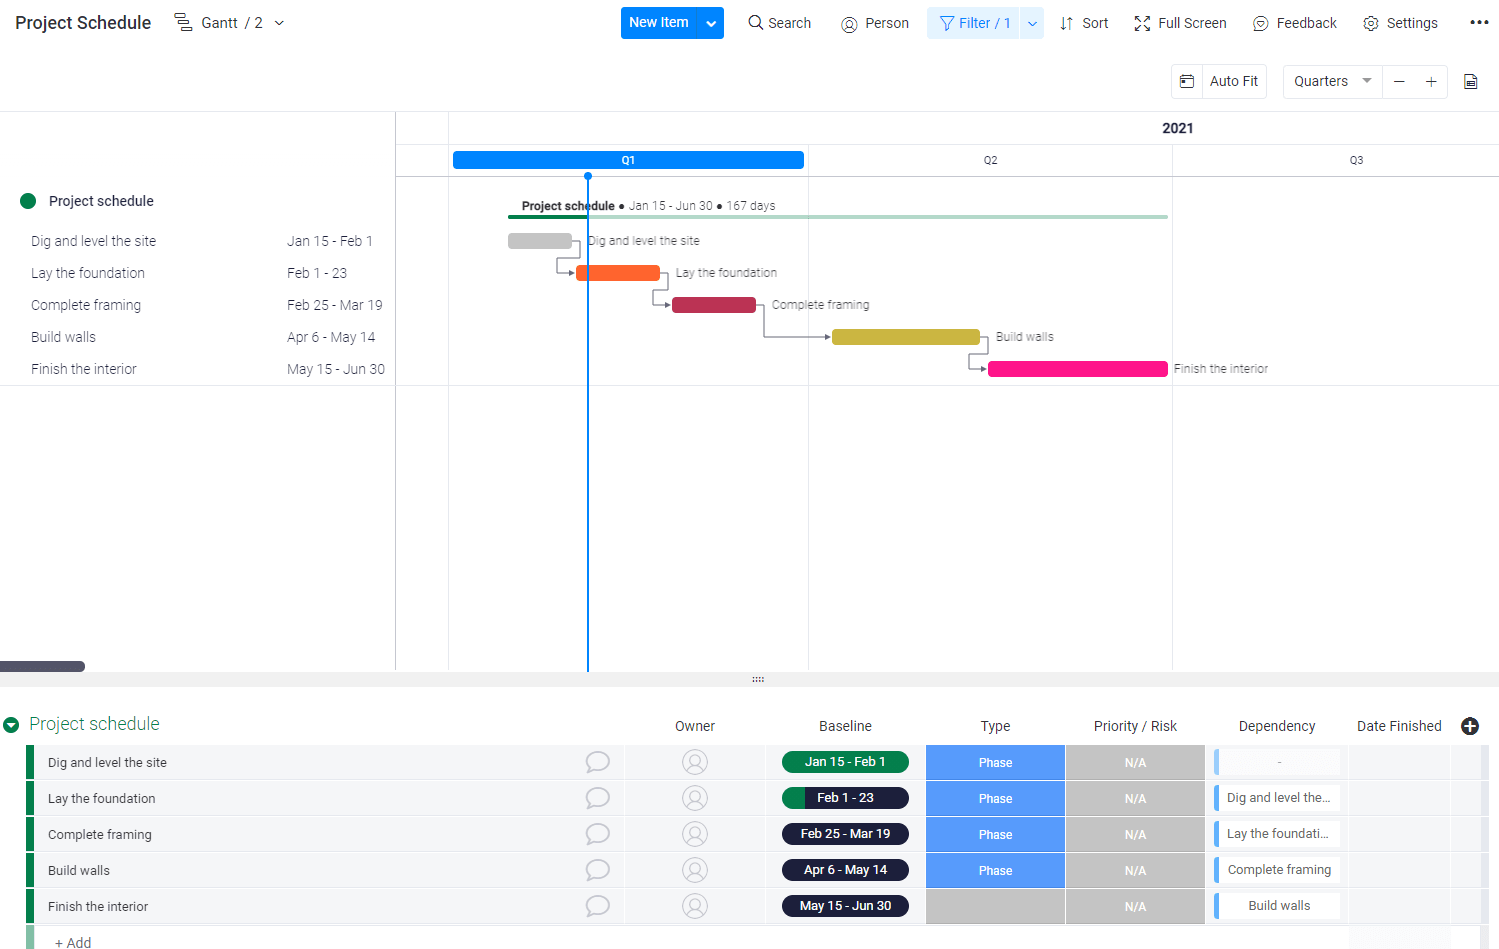 Project schedule Gantt view in monday.com